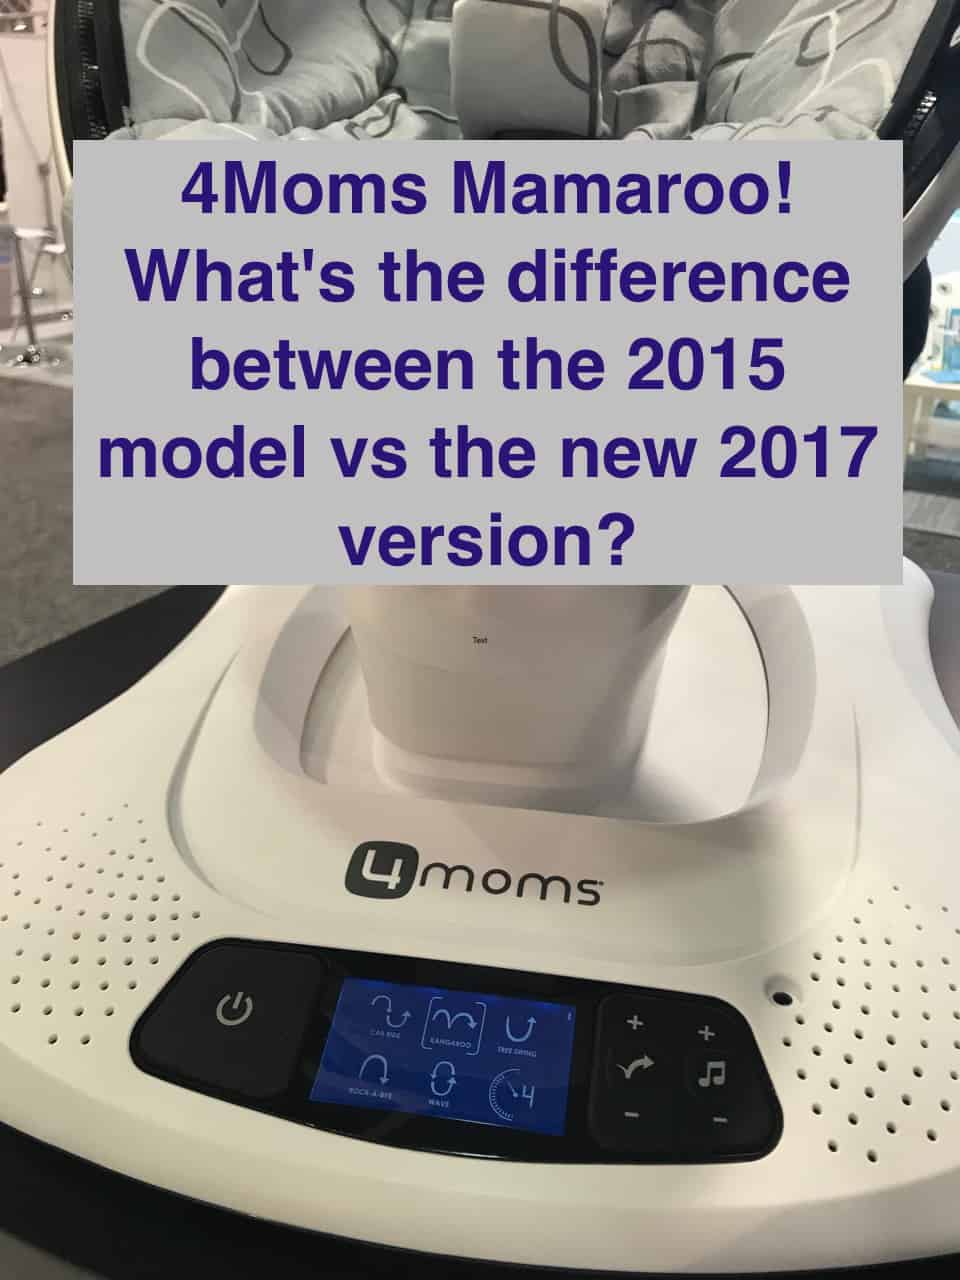 4moms mamaroo model 1026